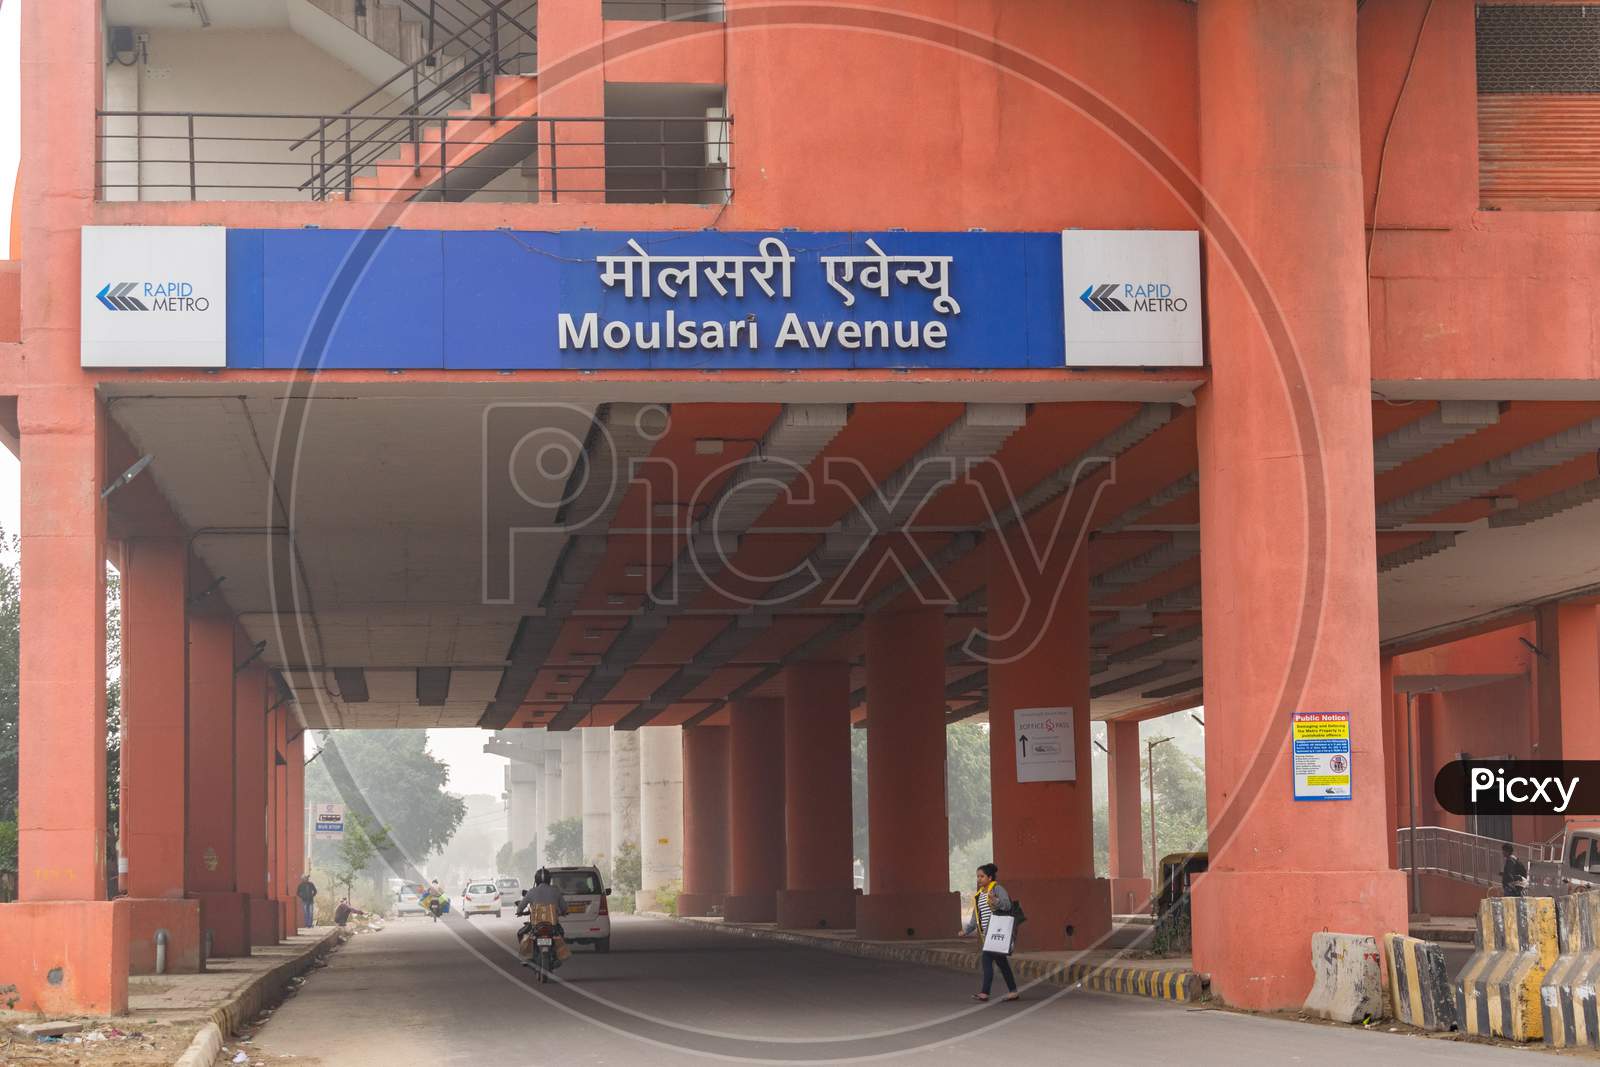 Moulsari Avenue metro station at rapid metro Gurgaon near DLF cyber city